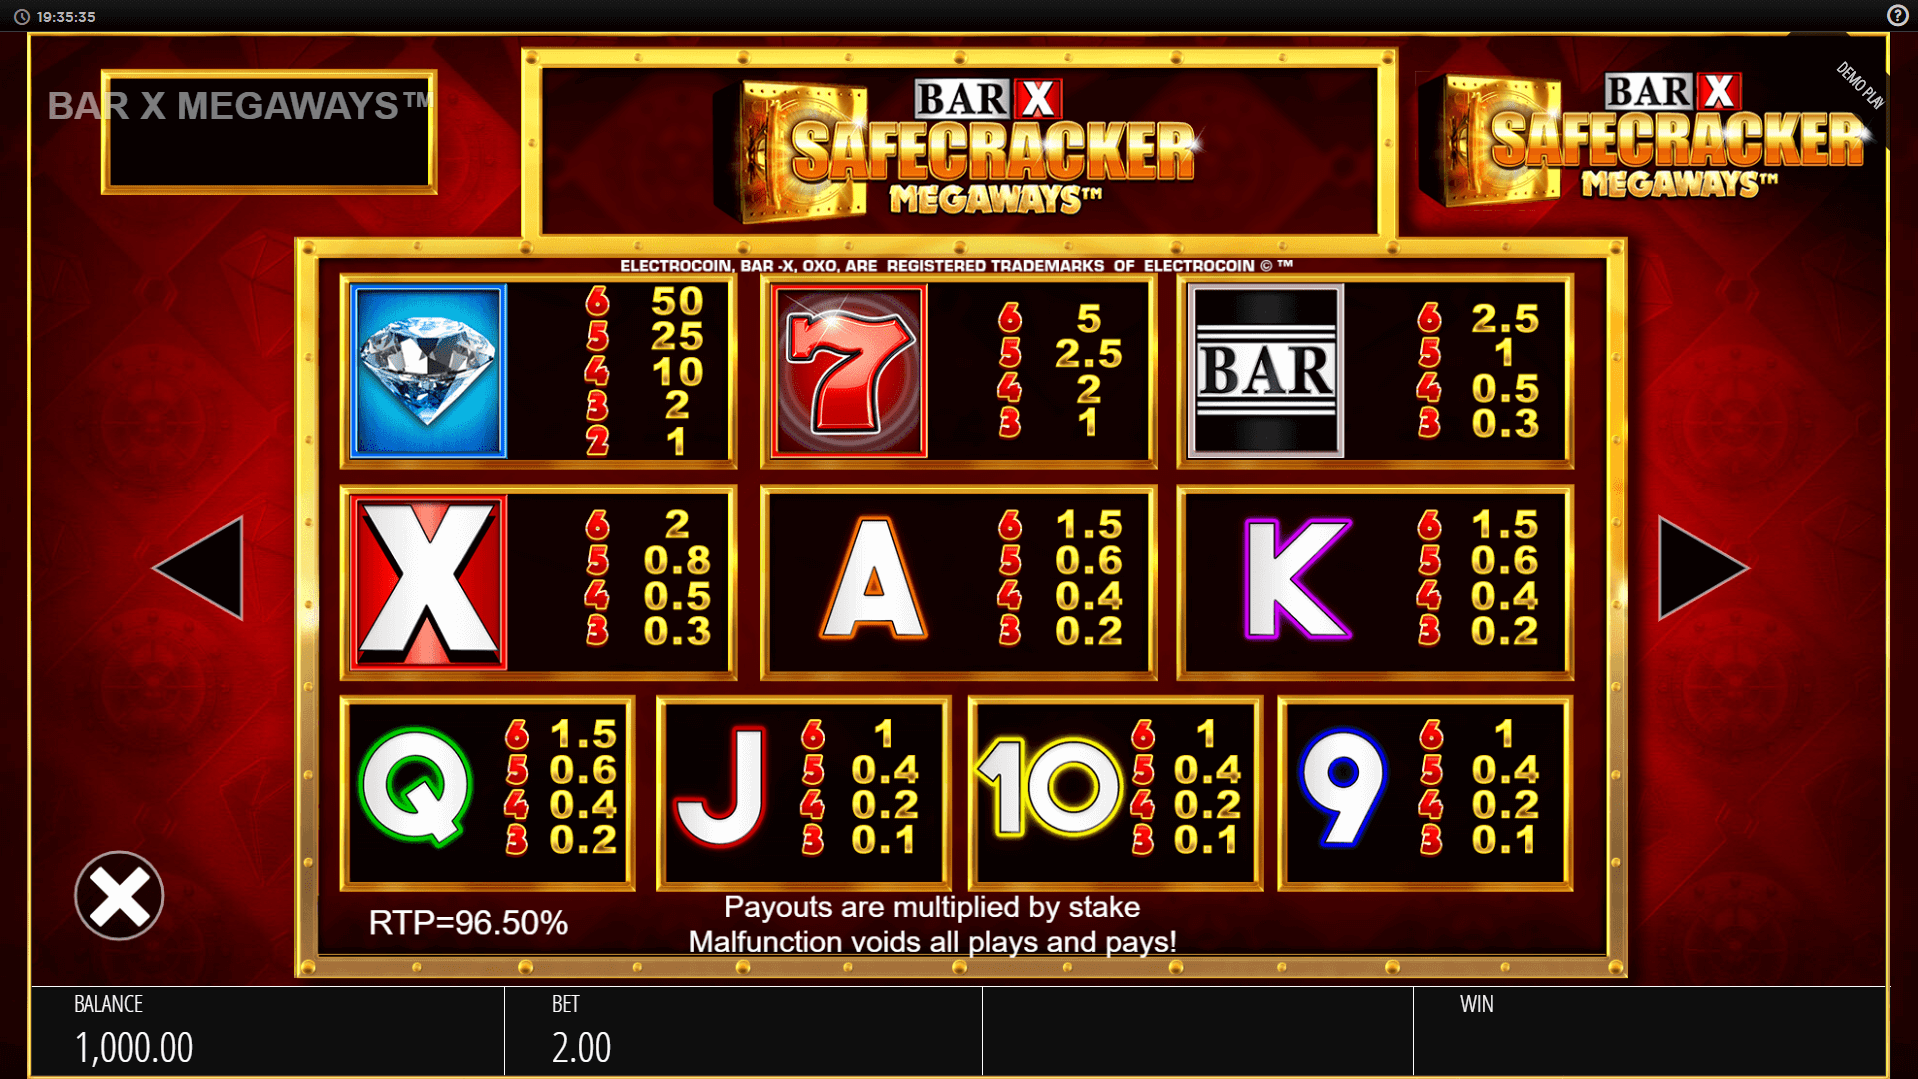 bar x safecracker megaways slot machine detail image 2